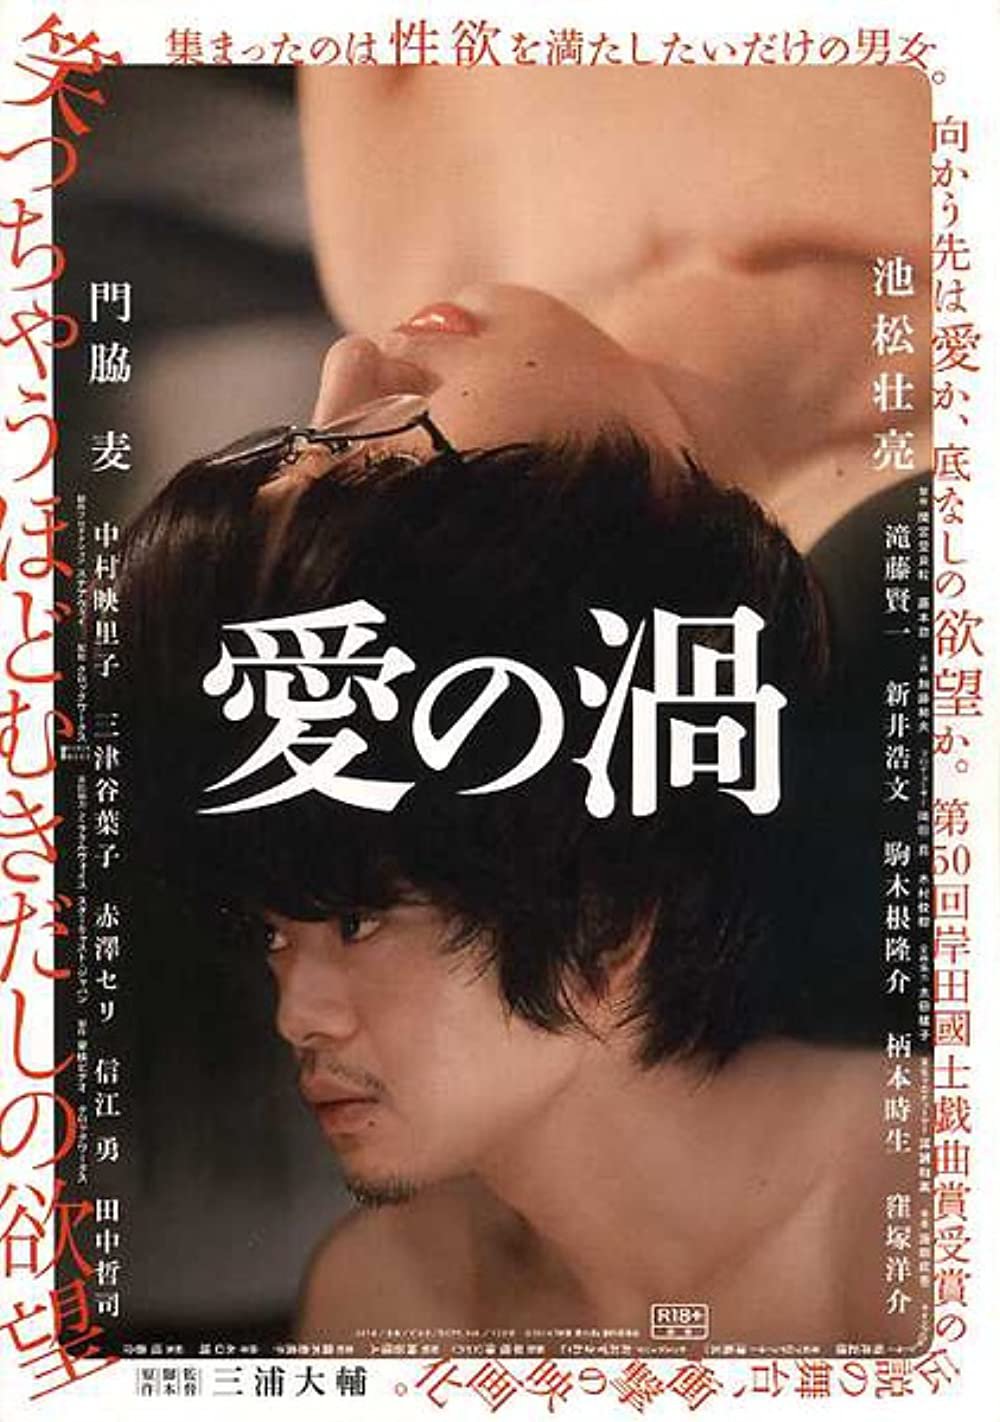 Japanese erotic movies online